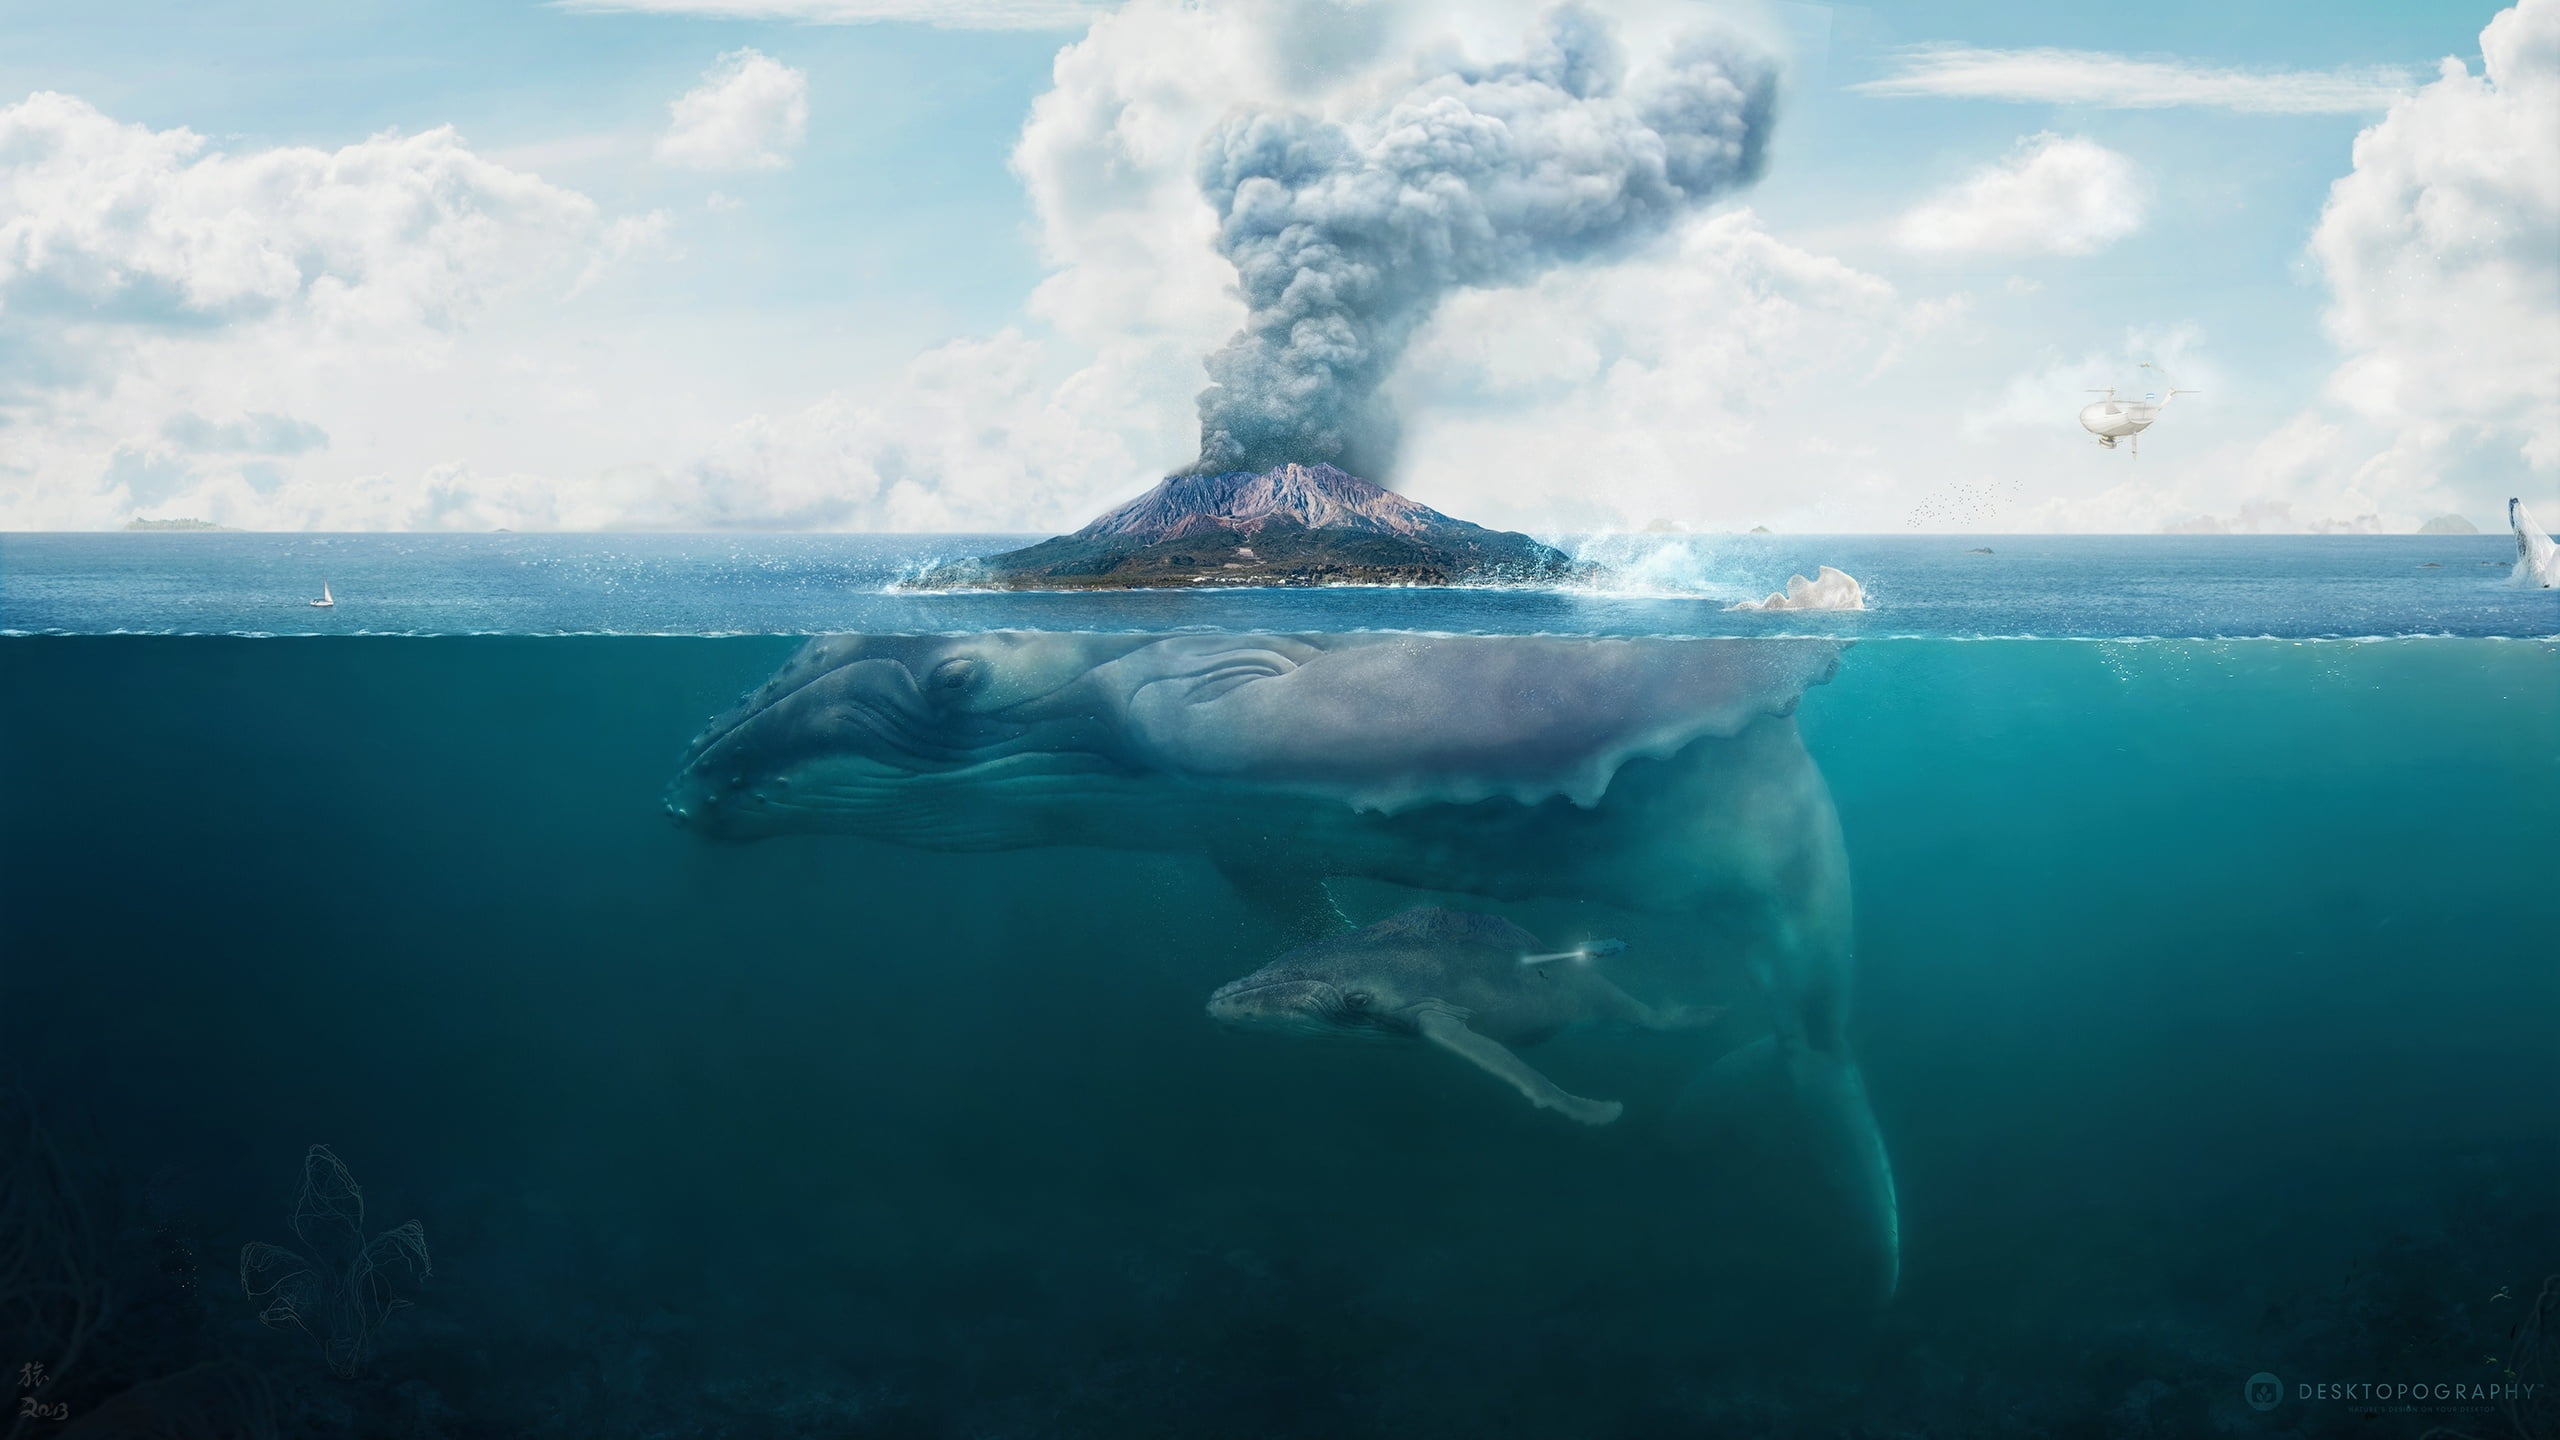 body of water, fiction, island, the volcano, art, kit, desktopography